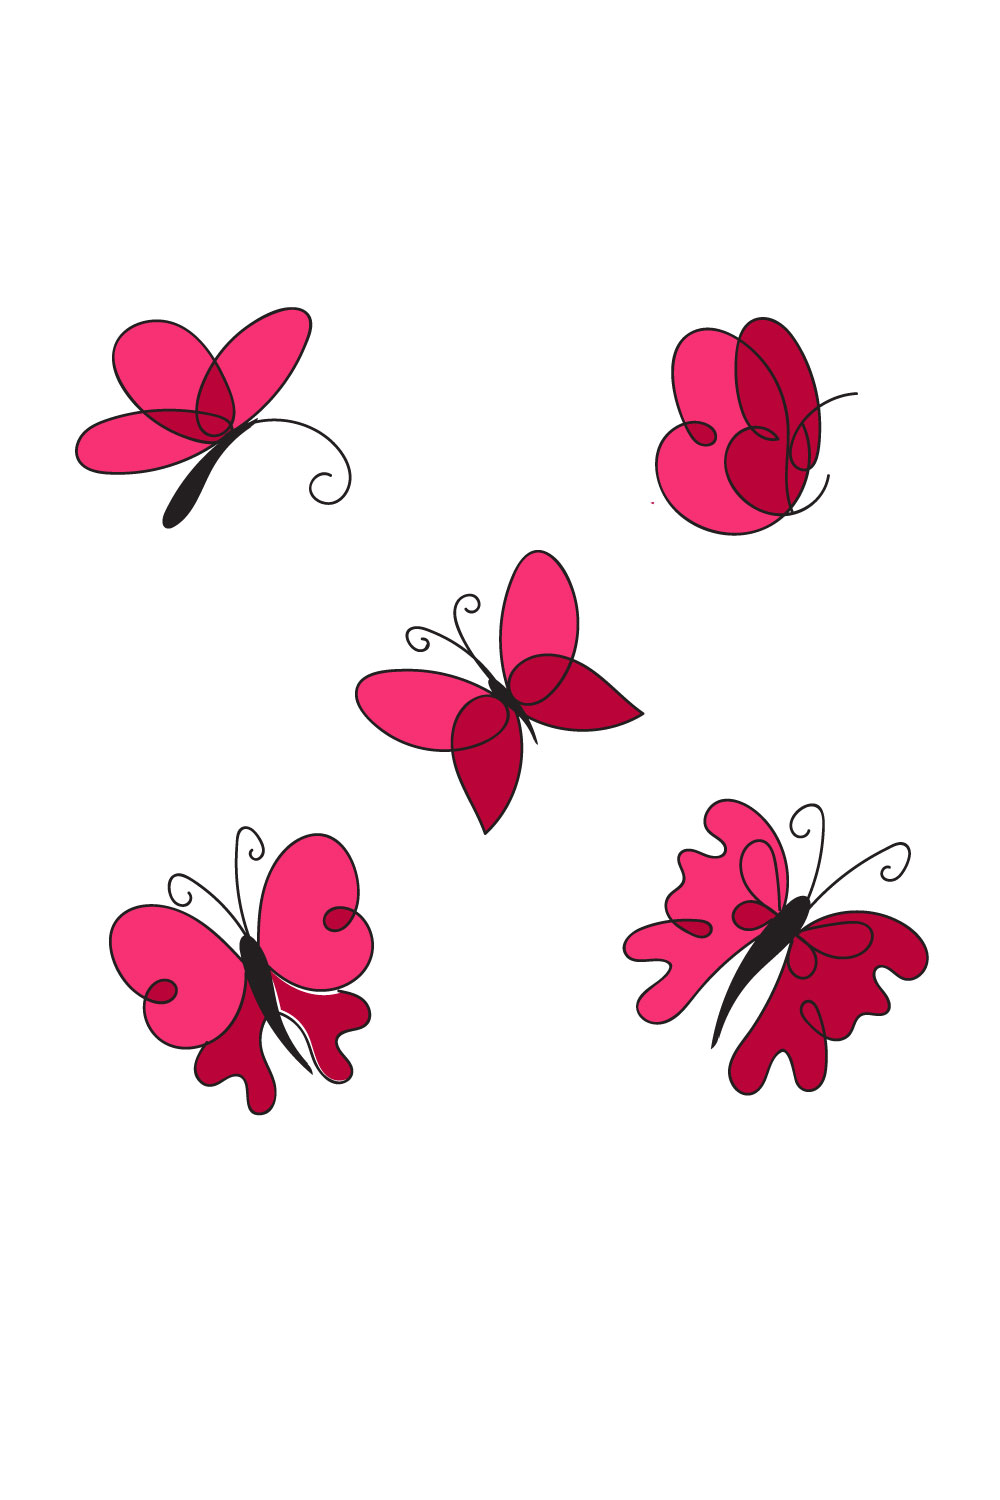 Butterfly liner art bundle pinterest preview image.